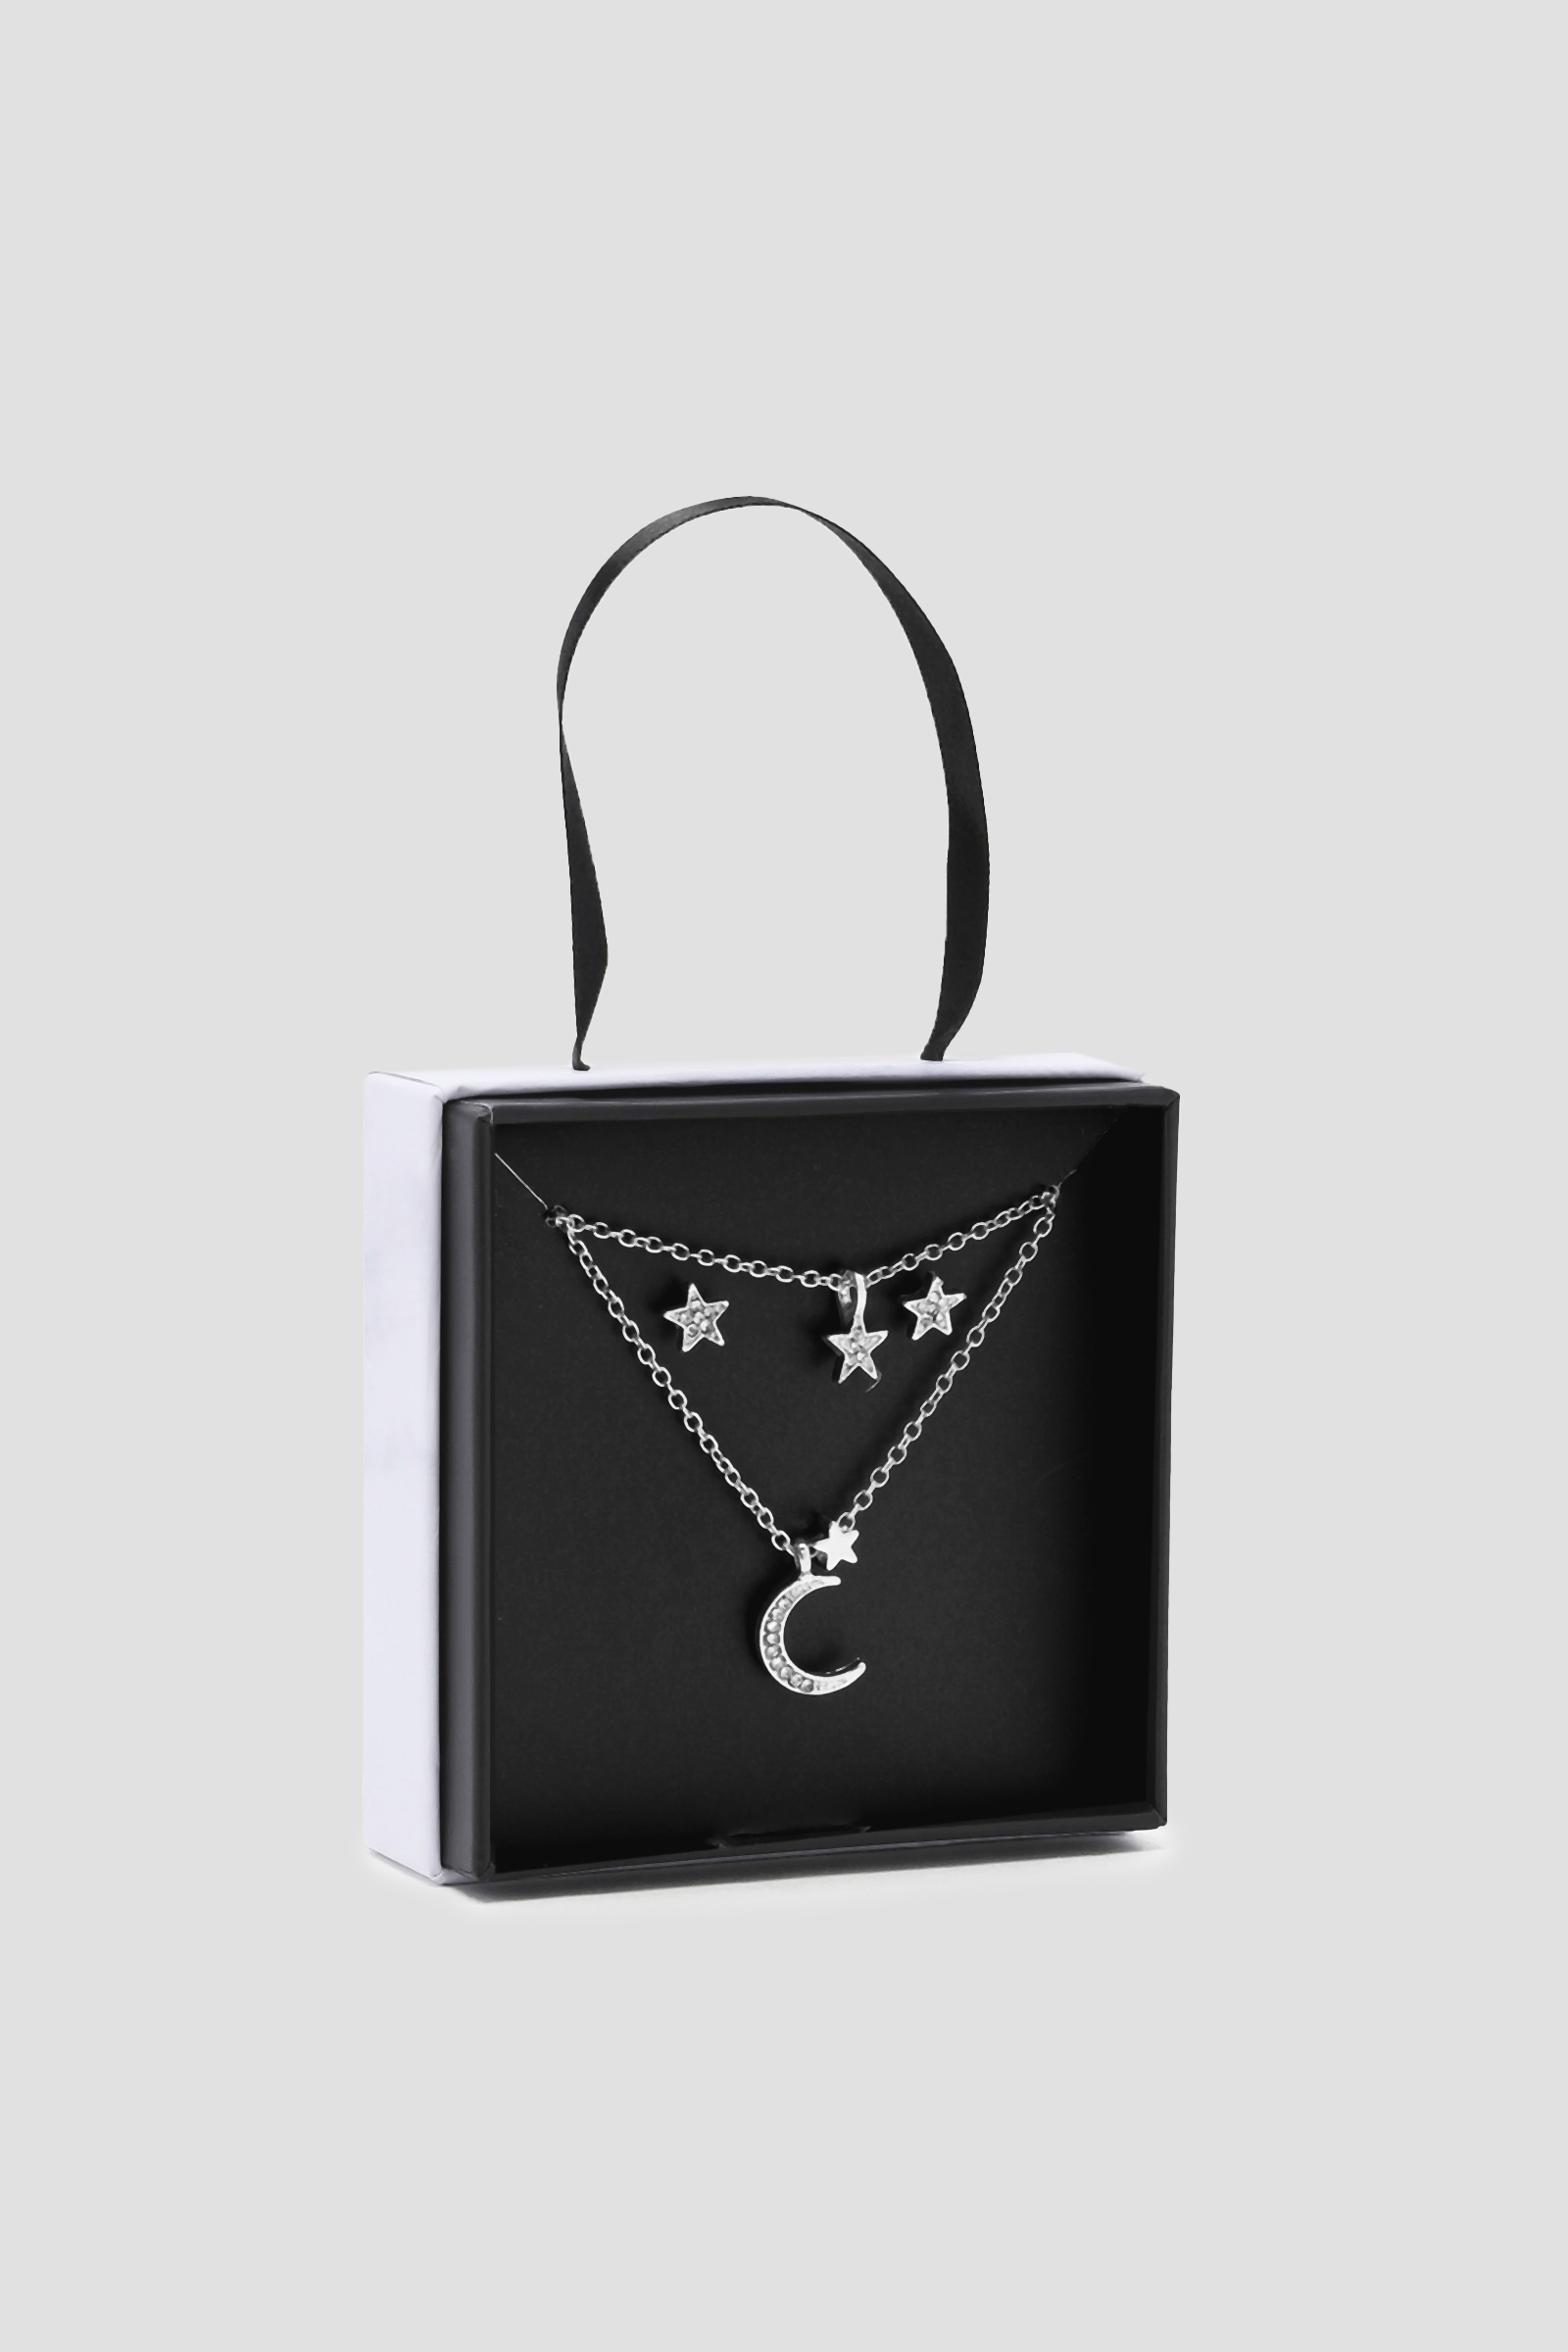 Ardene Moon & Star Necklace & Earring Gift Set in Silver | Stainless Steel